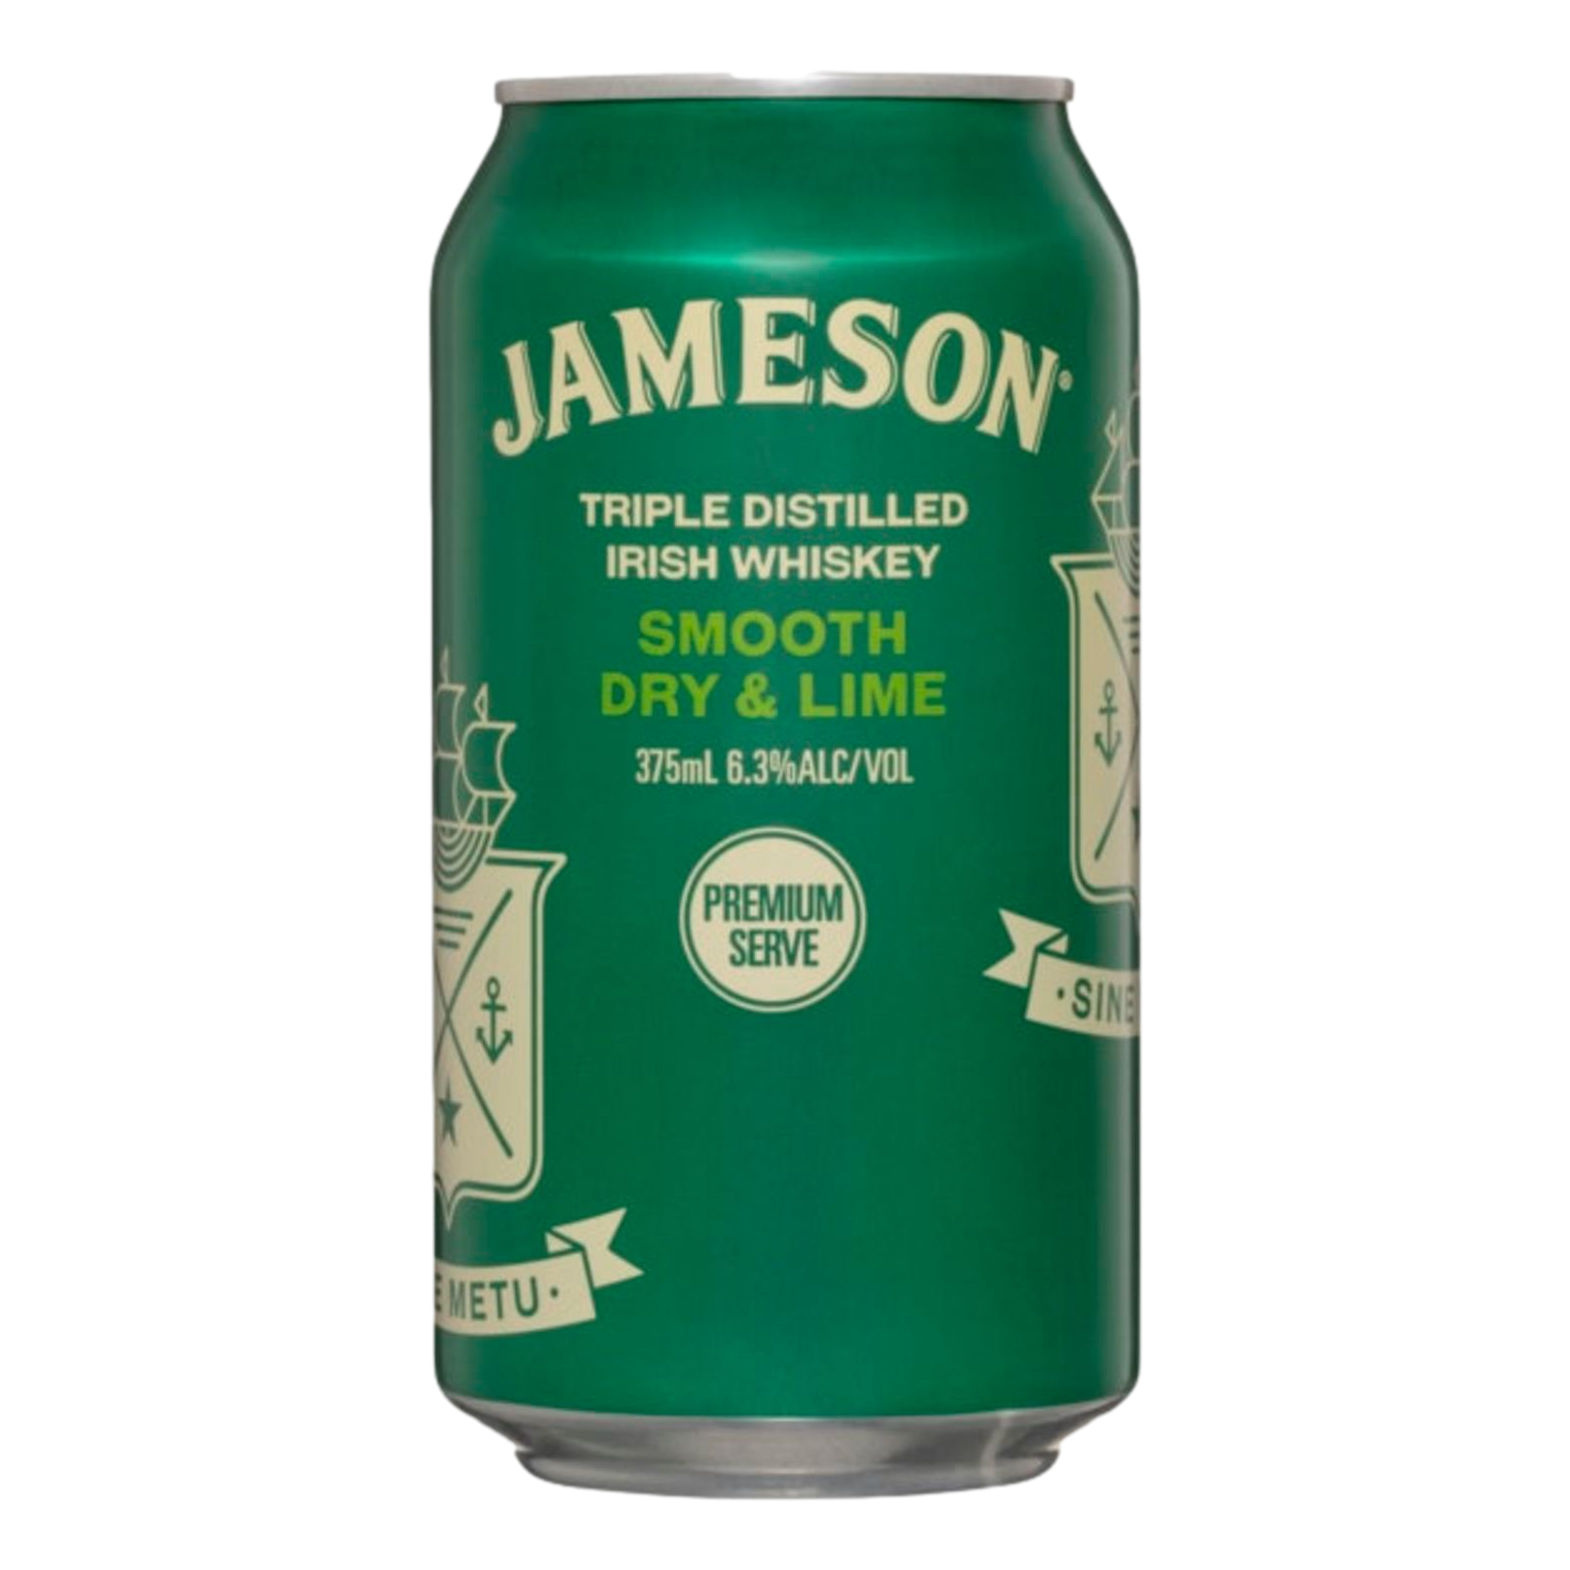 Jameson Smooth Dry & Lime Premium Serve 6.3% 375ml Can Single